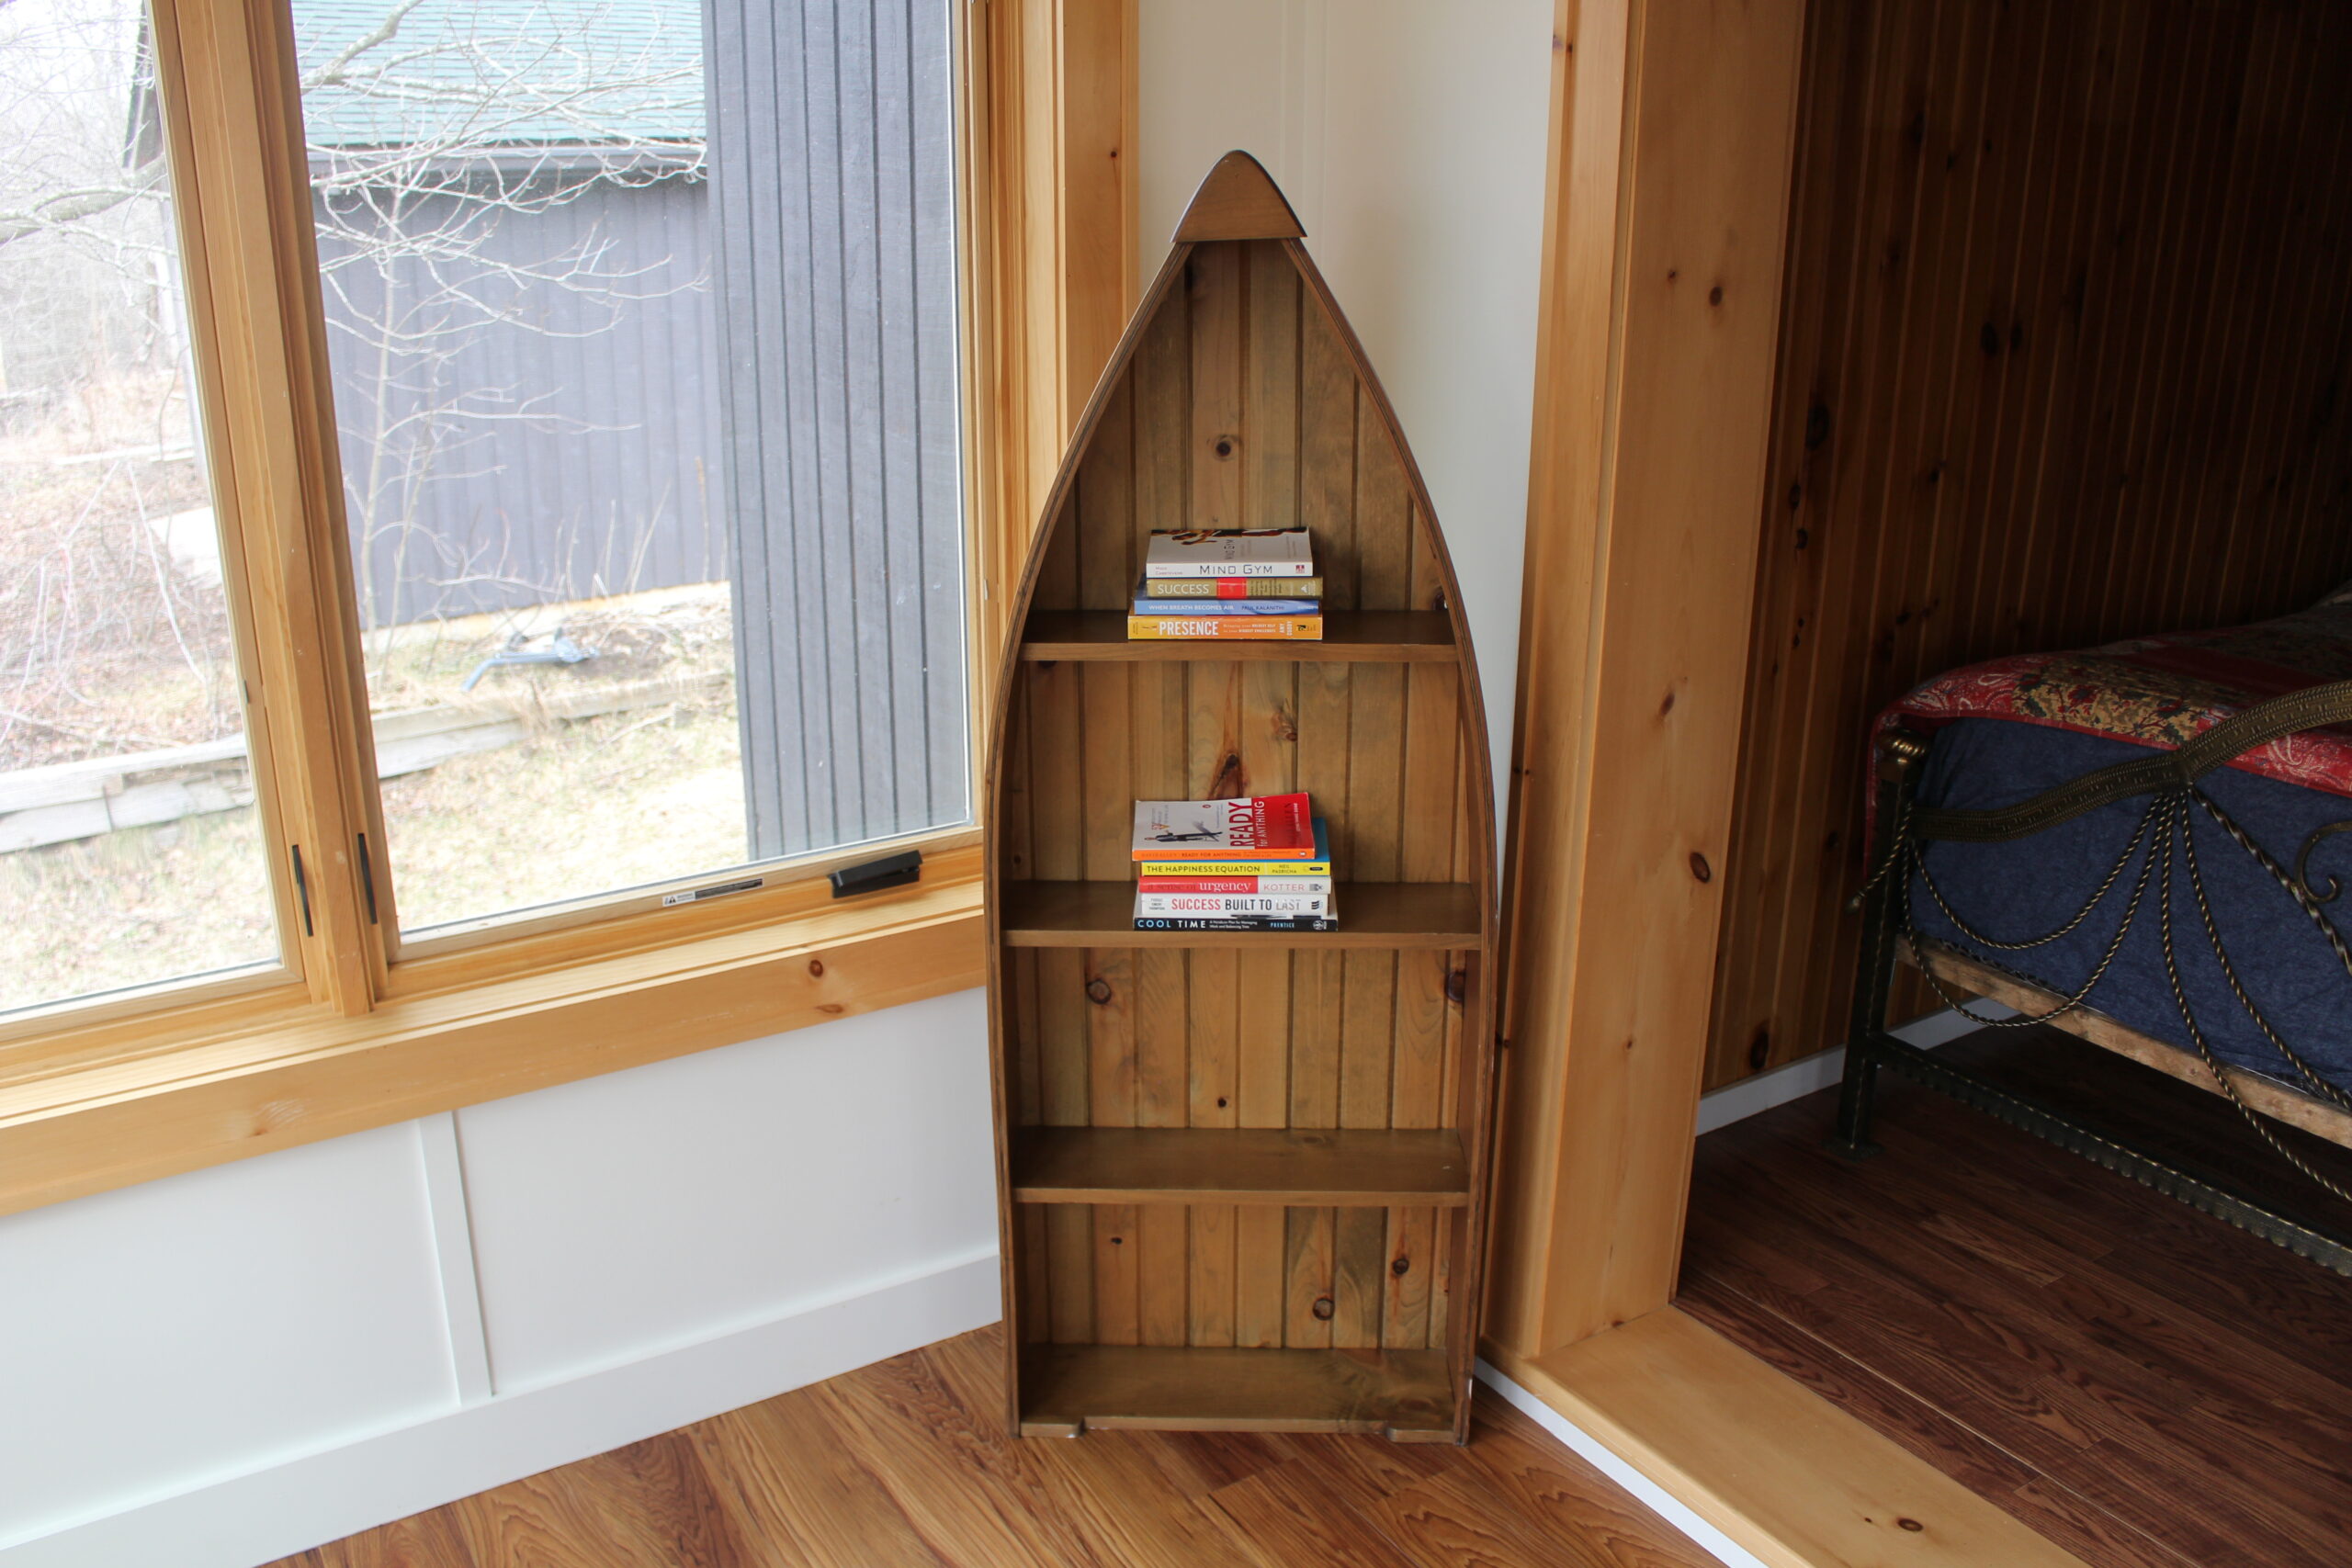 Book Shelf in Sunroom